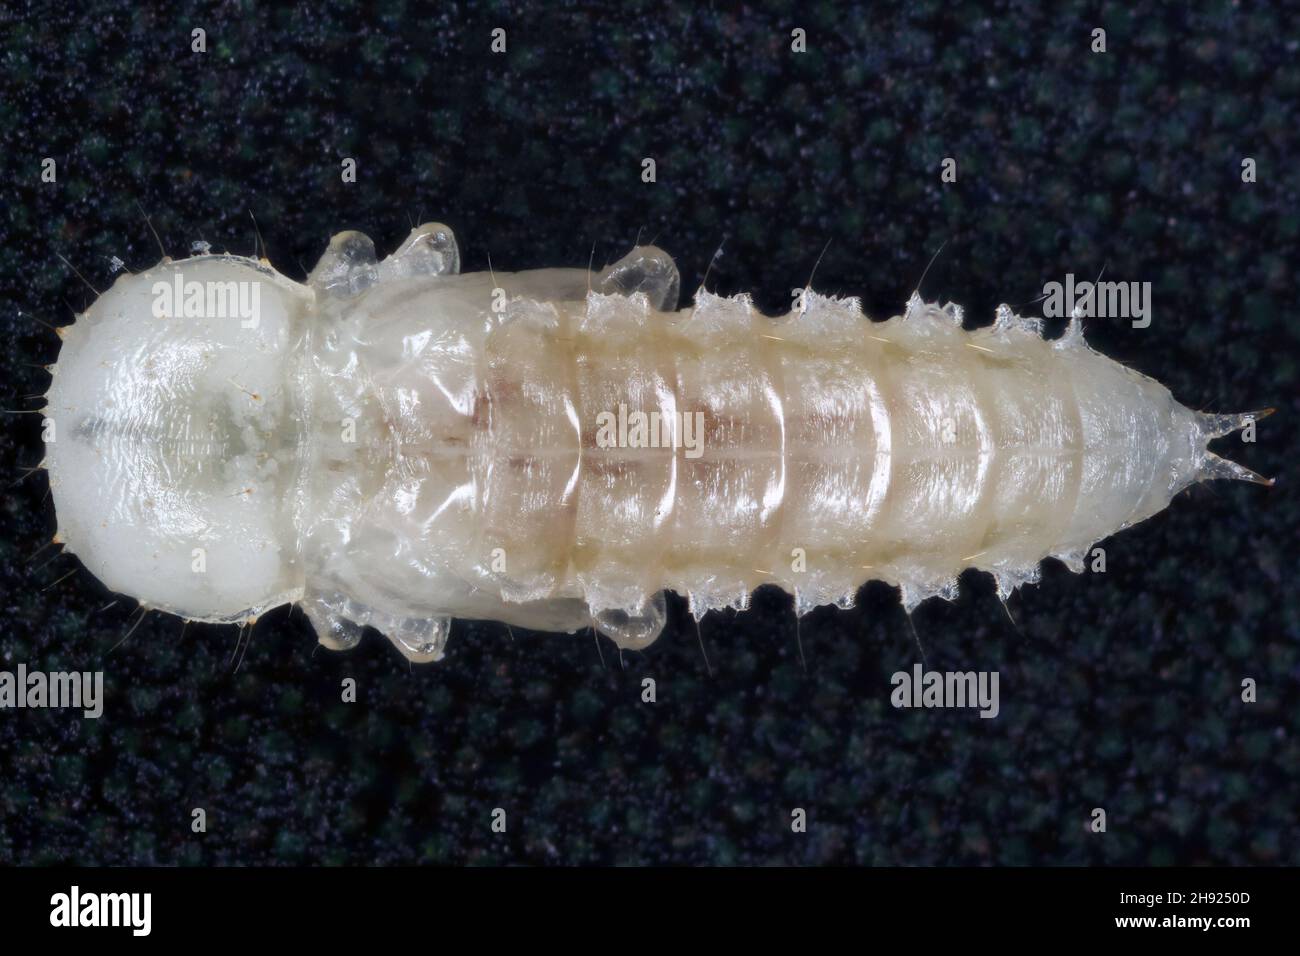 Pupa of Broad-horned flour beetle: Gnatocerus cornutus - is a stored pest. Stock Photo